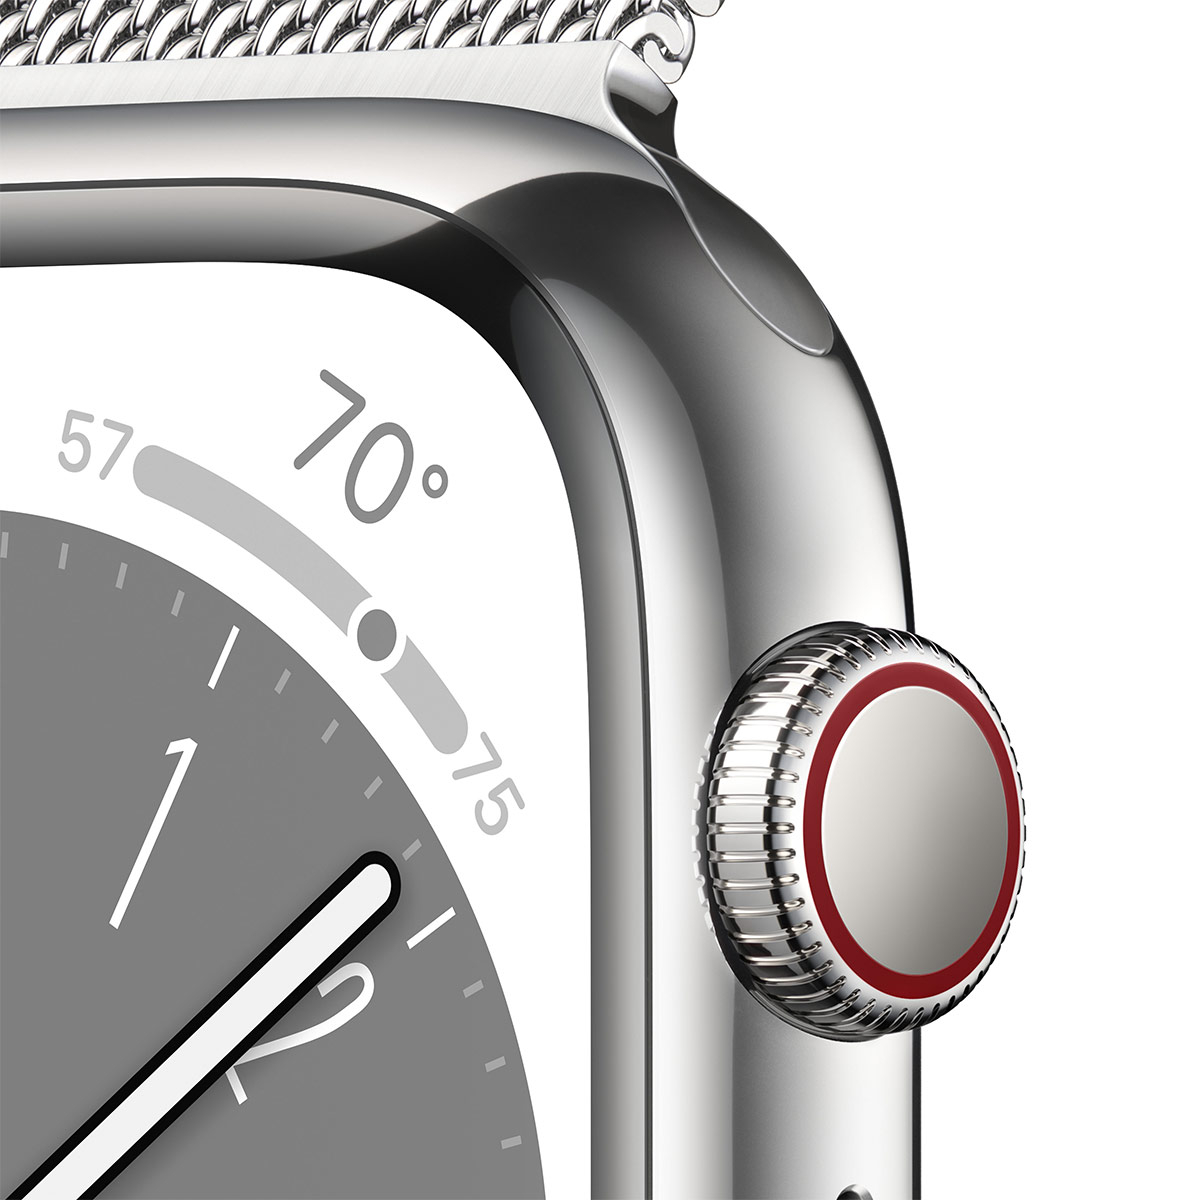 Apple - Smartwatch Apple Watch Series 8 GPS LTE 45mm Aço Inoxidável Silver com Loop Milanesa Silver